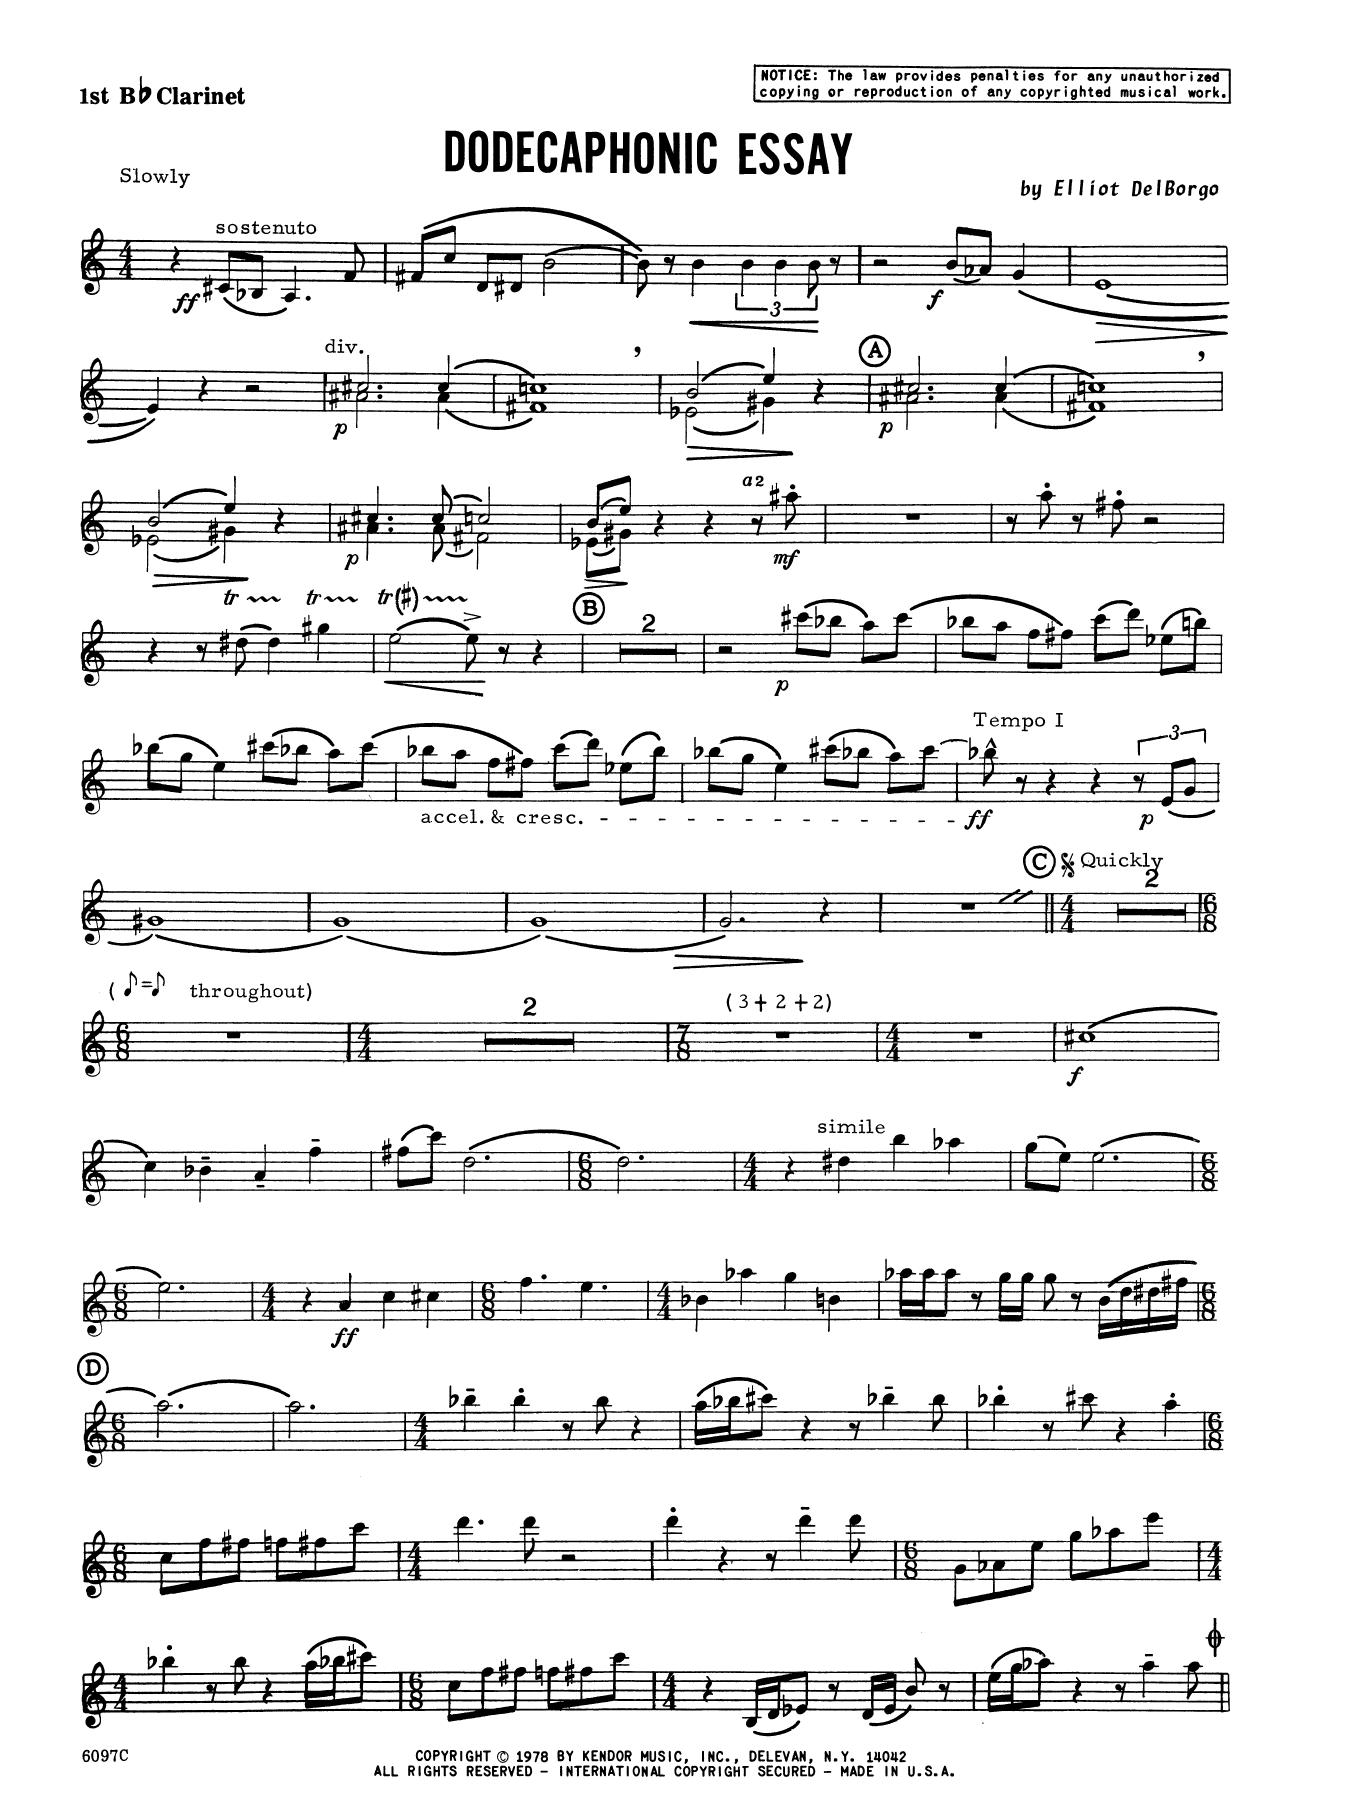 Download Elliot A. Del Borgo Dodecaphonic Essay - 1st Bb Clarinet Sheet Music